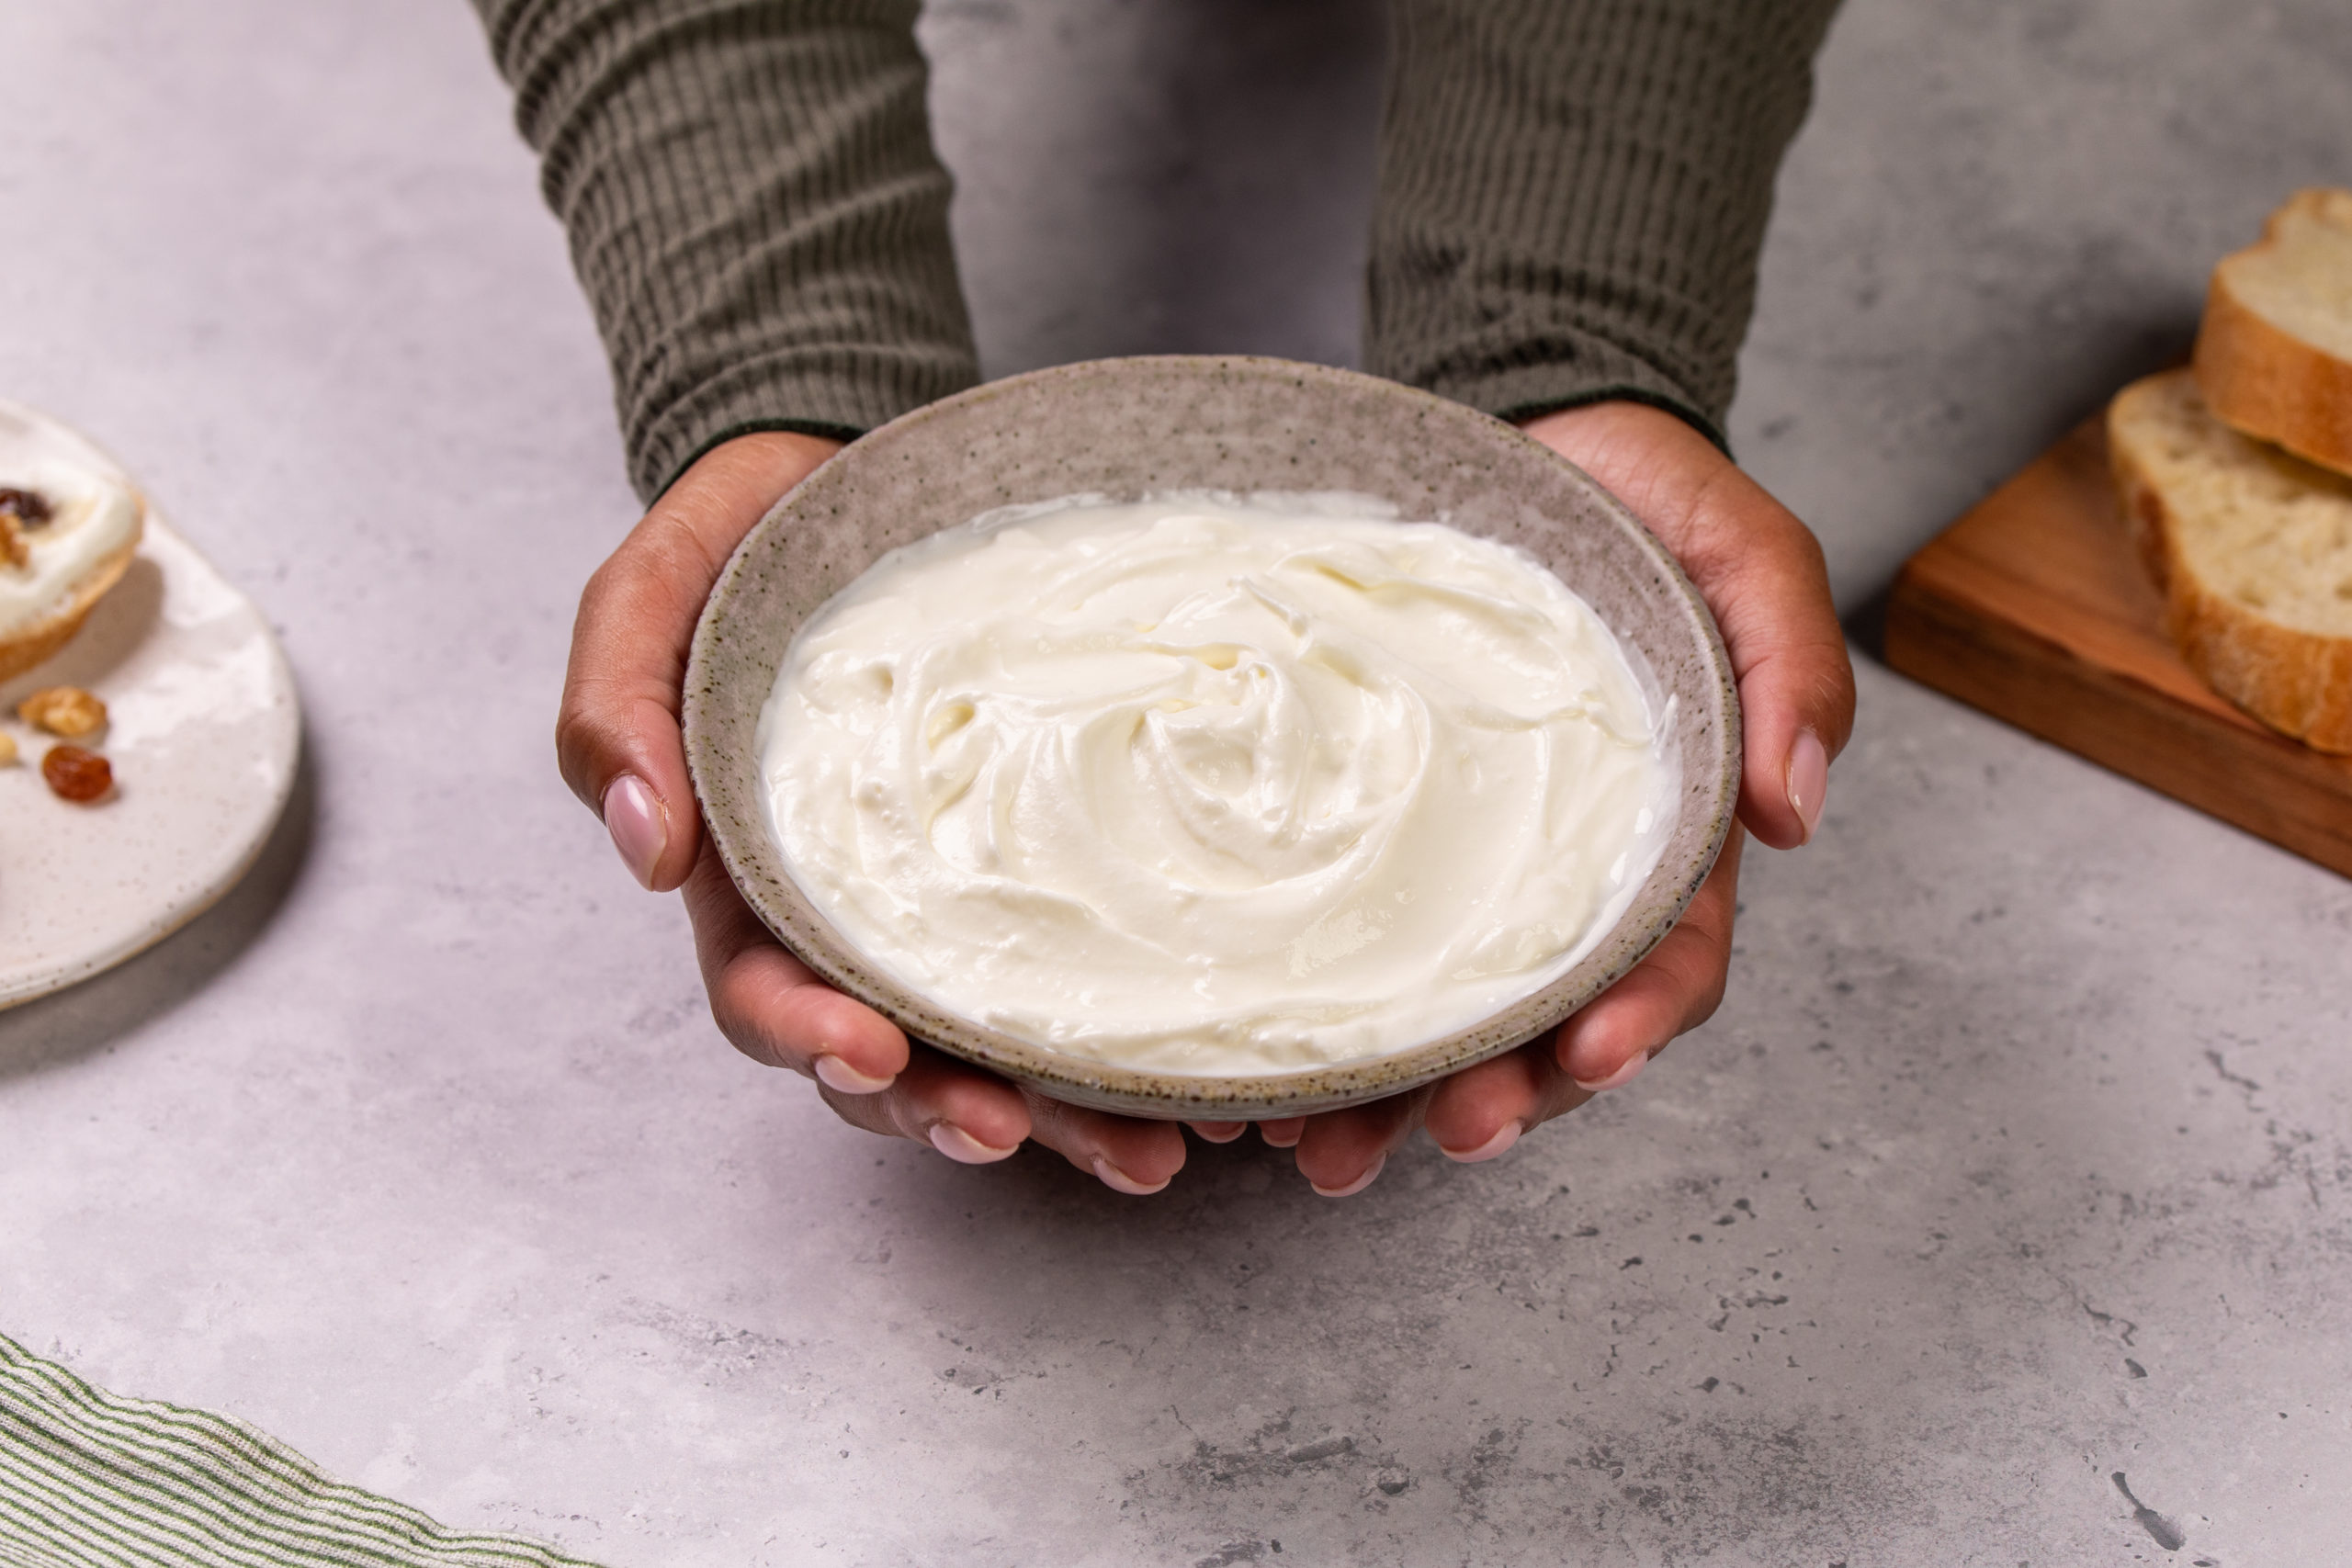 Hands holding bowl of labneh yogurt